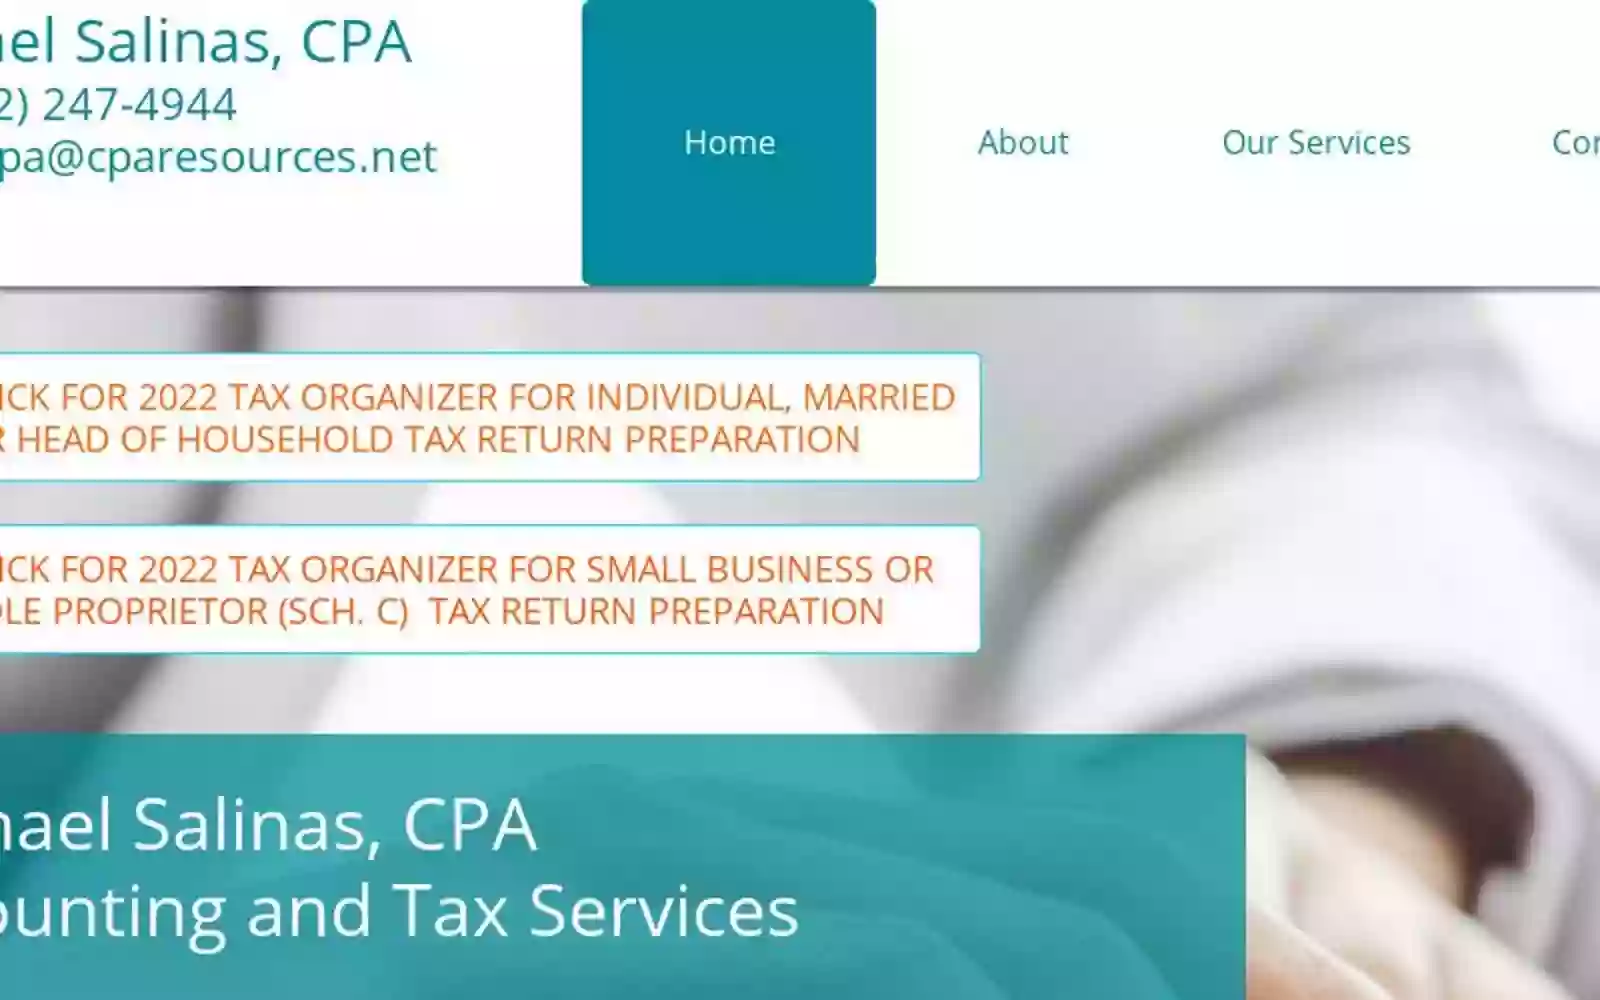 CPA Tax & Accounting Services, Michael Salinas, CPA